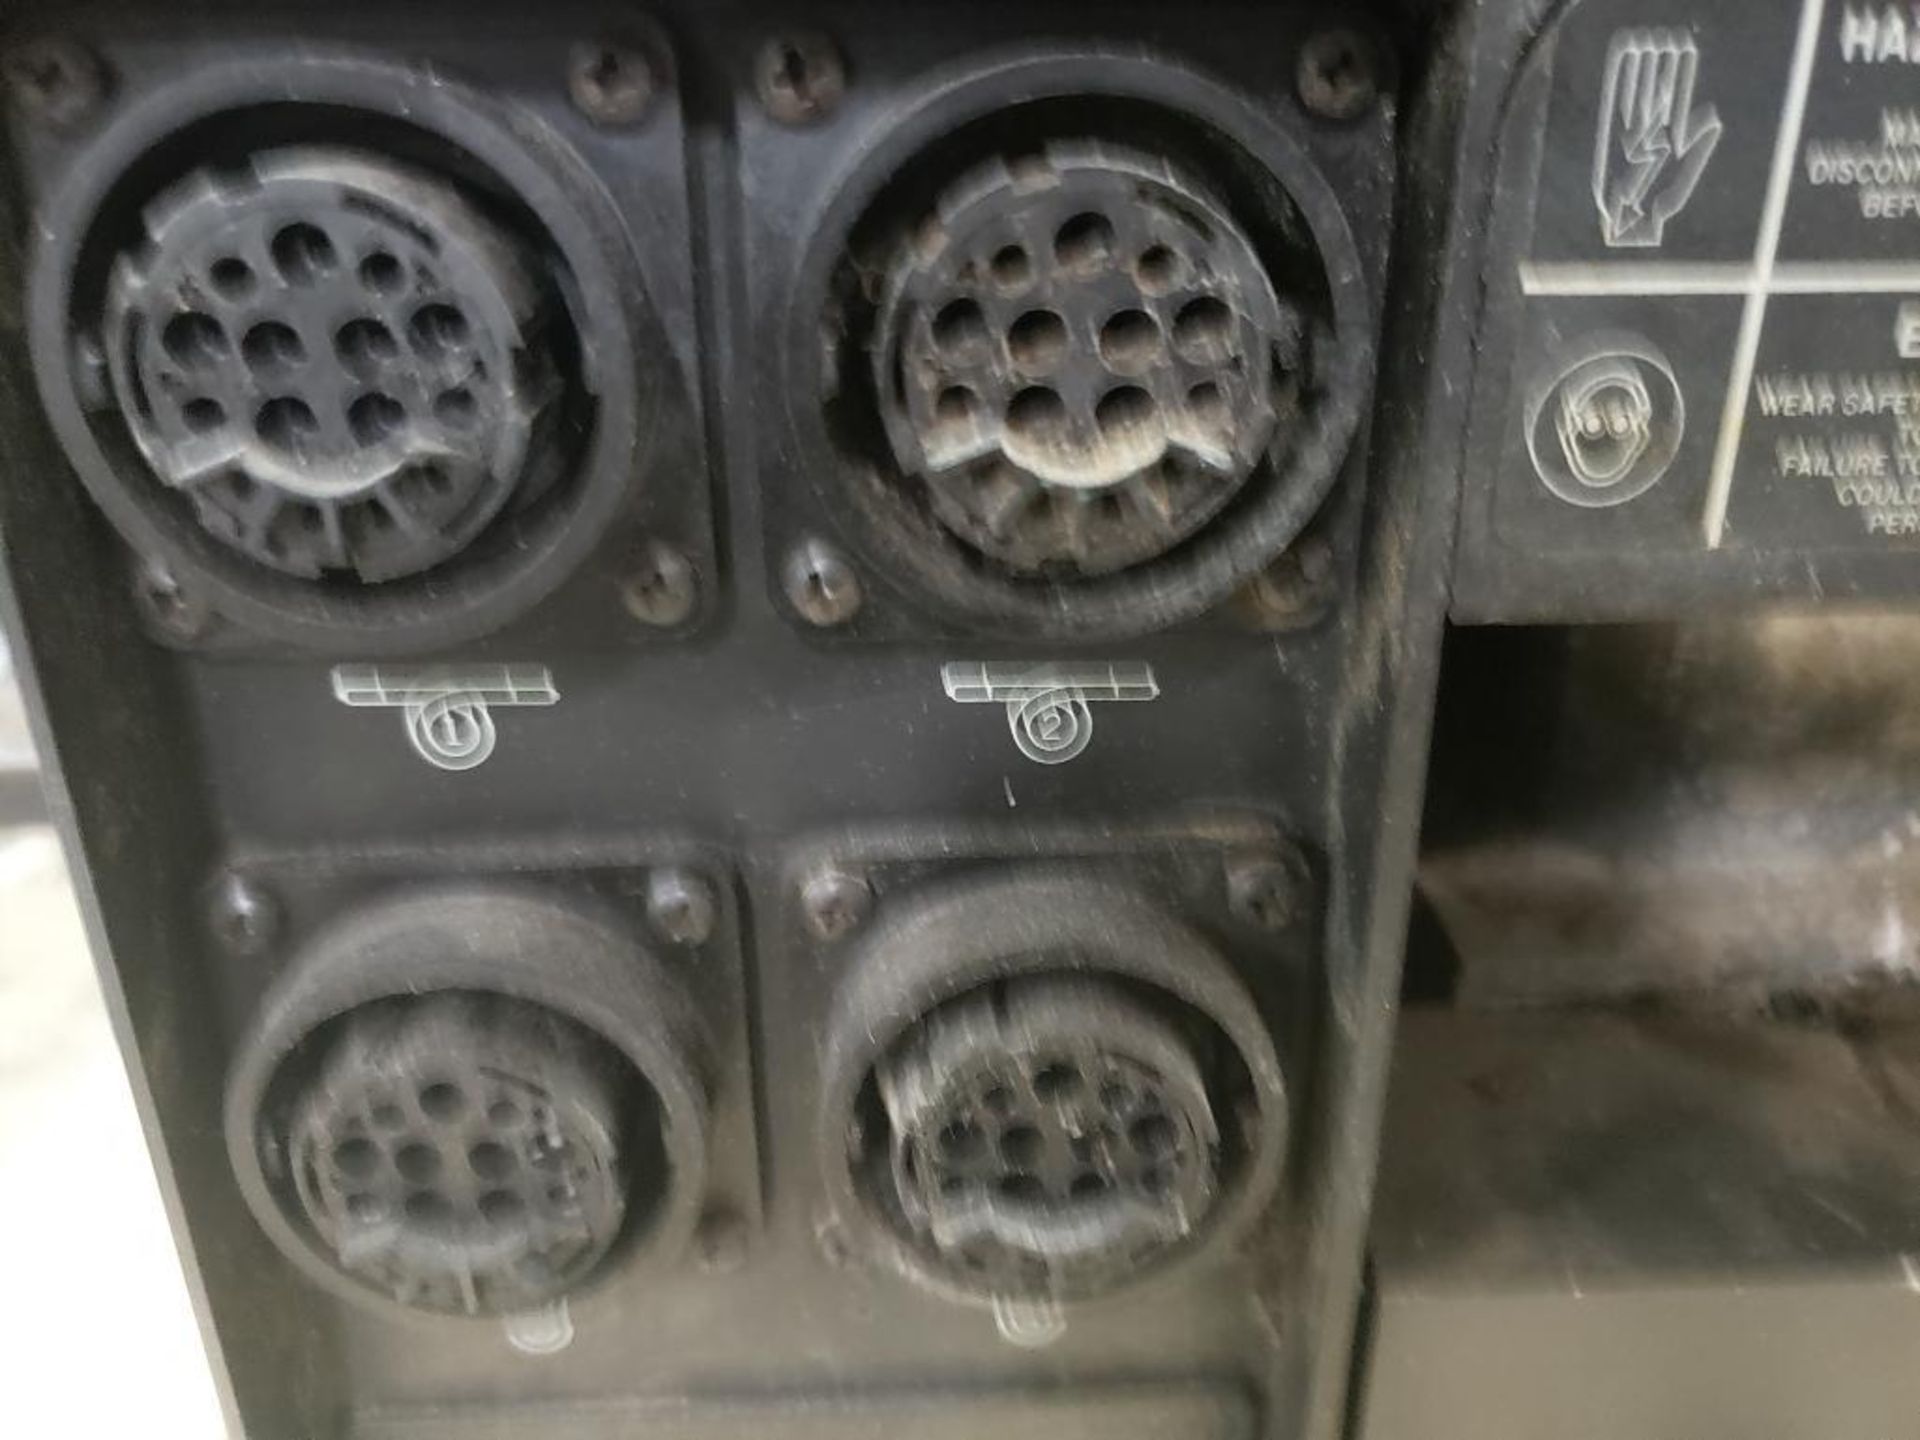 ITW Dynatec Dynamelt hot melt glue dispenser. Model S10-4-G45-24-GA. - Image 19 of 21